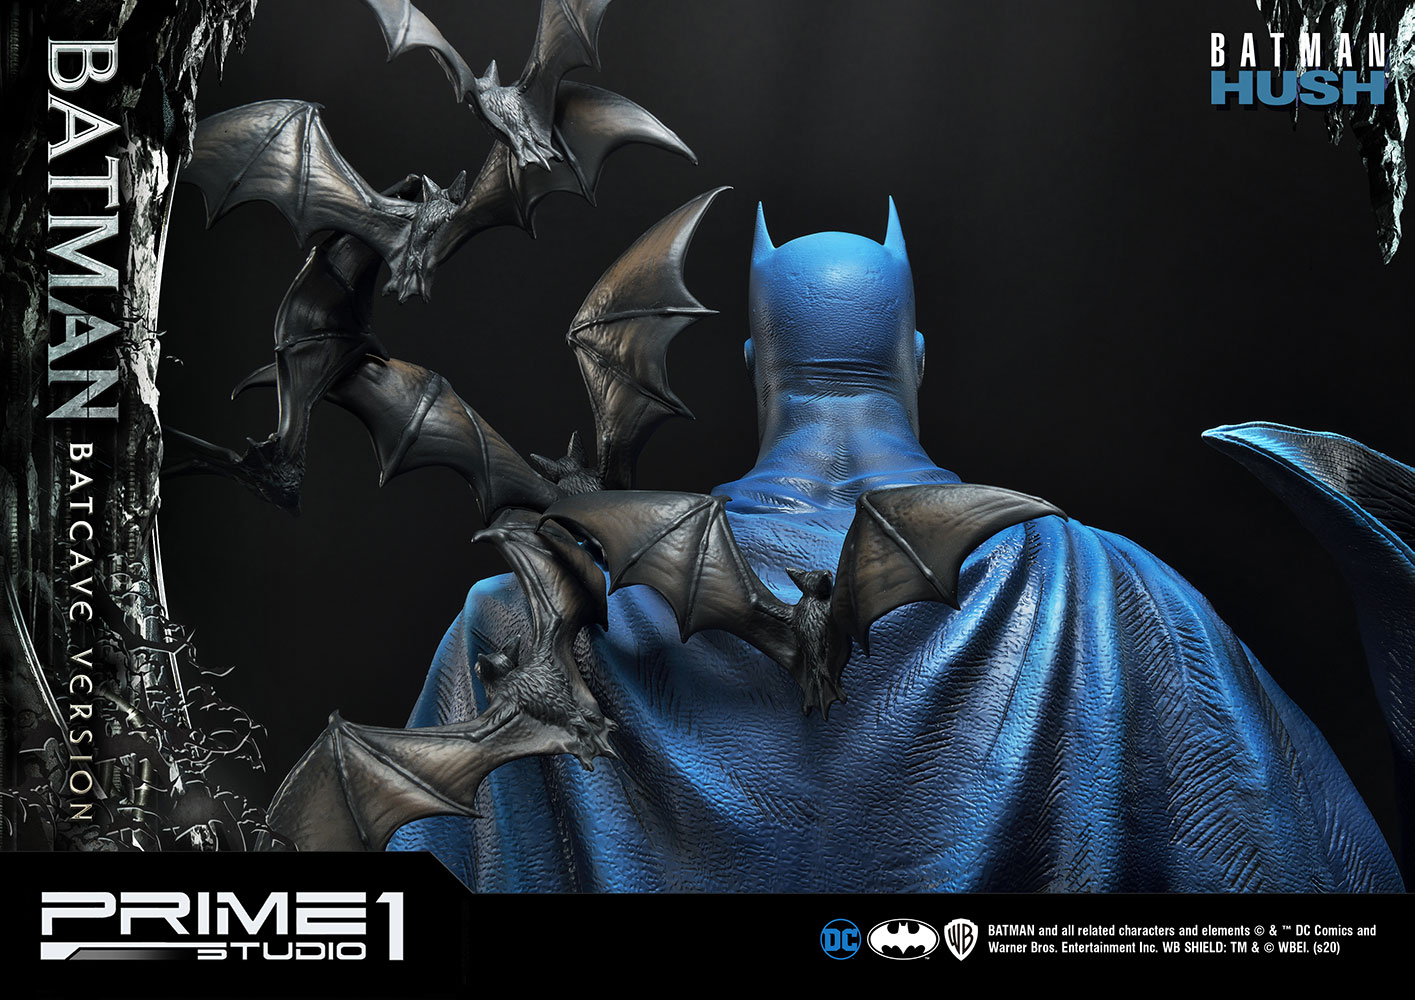 Batman Batcave Version Collector Edition (Prototype Shown) View 2